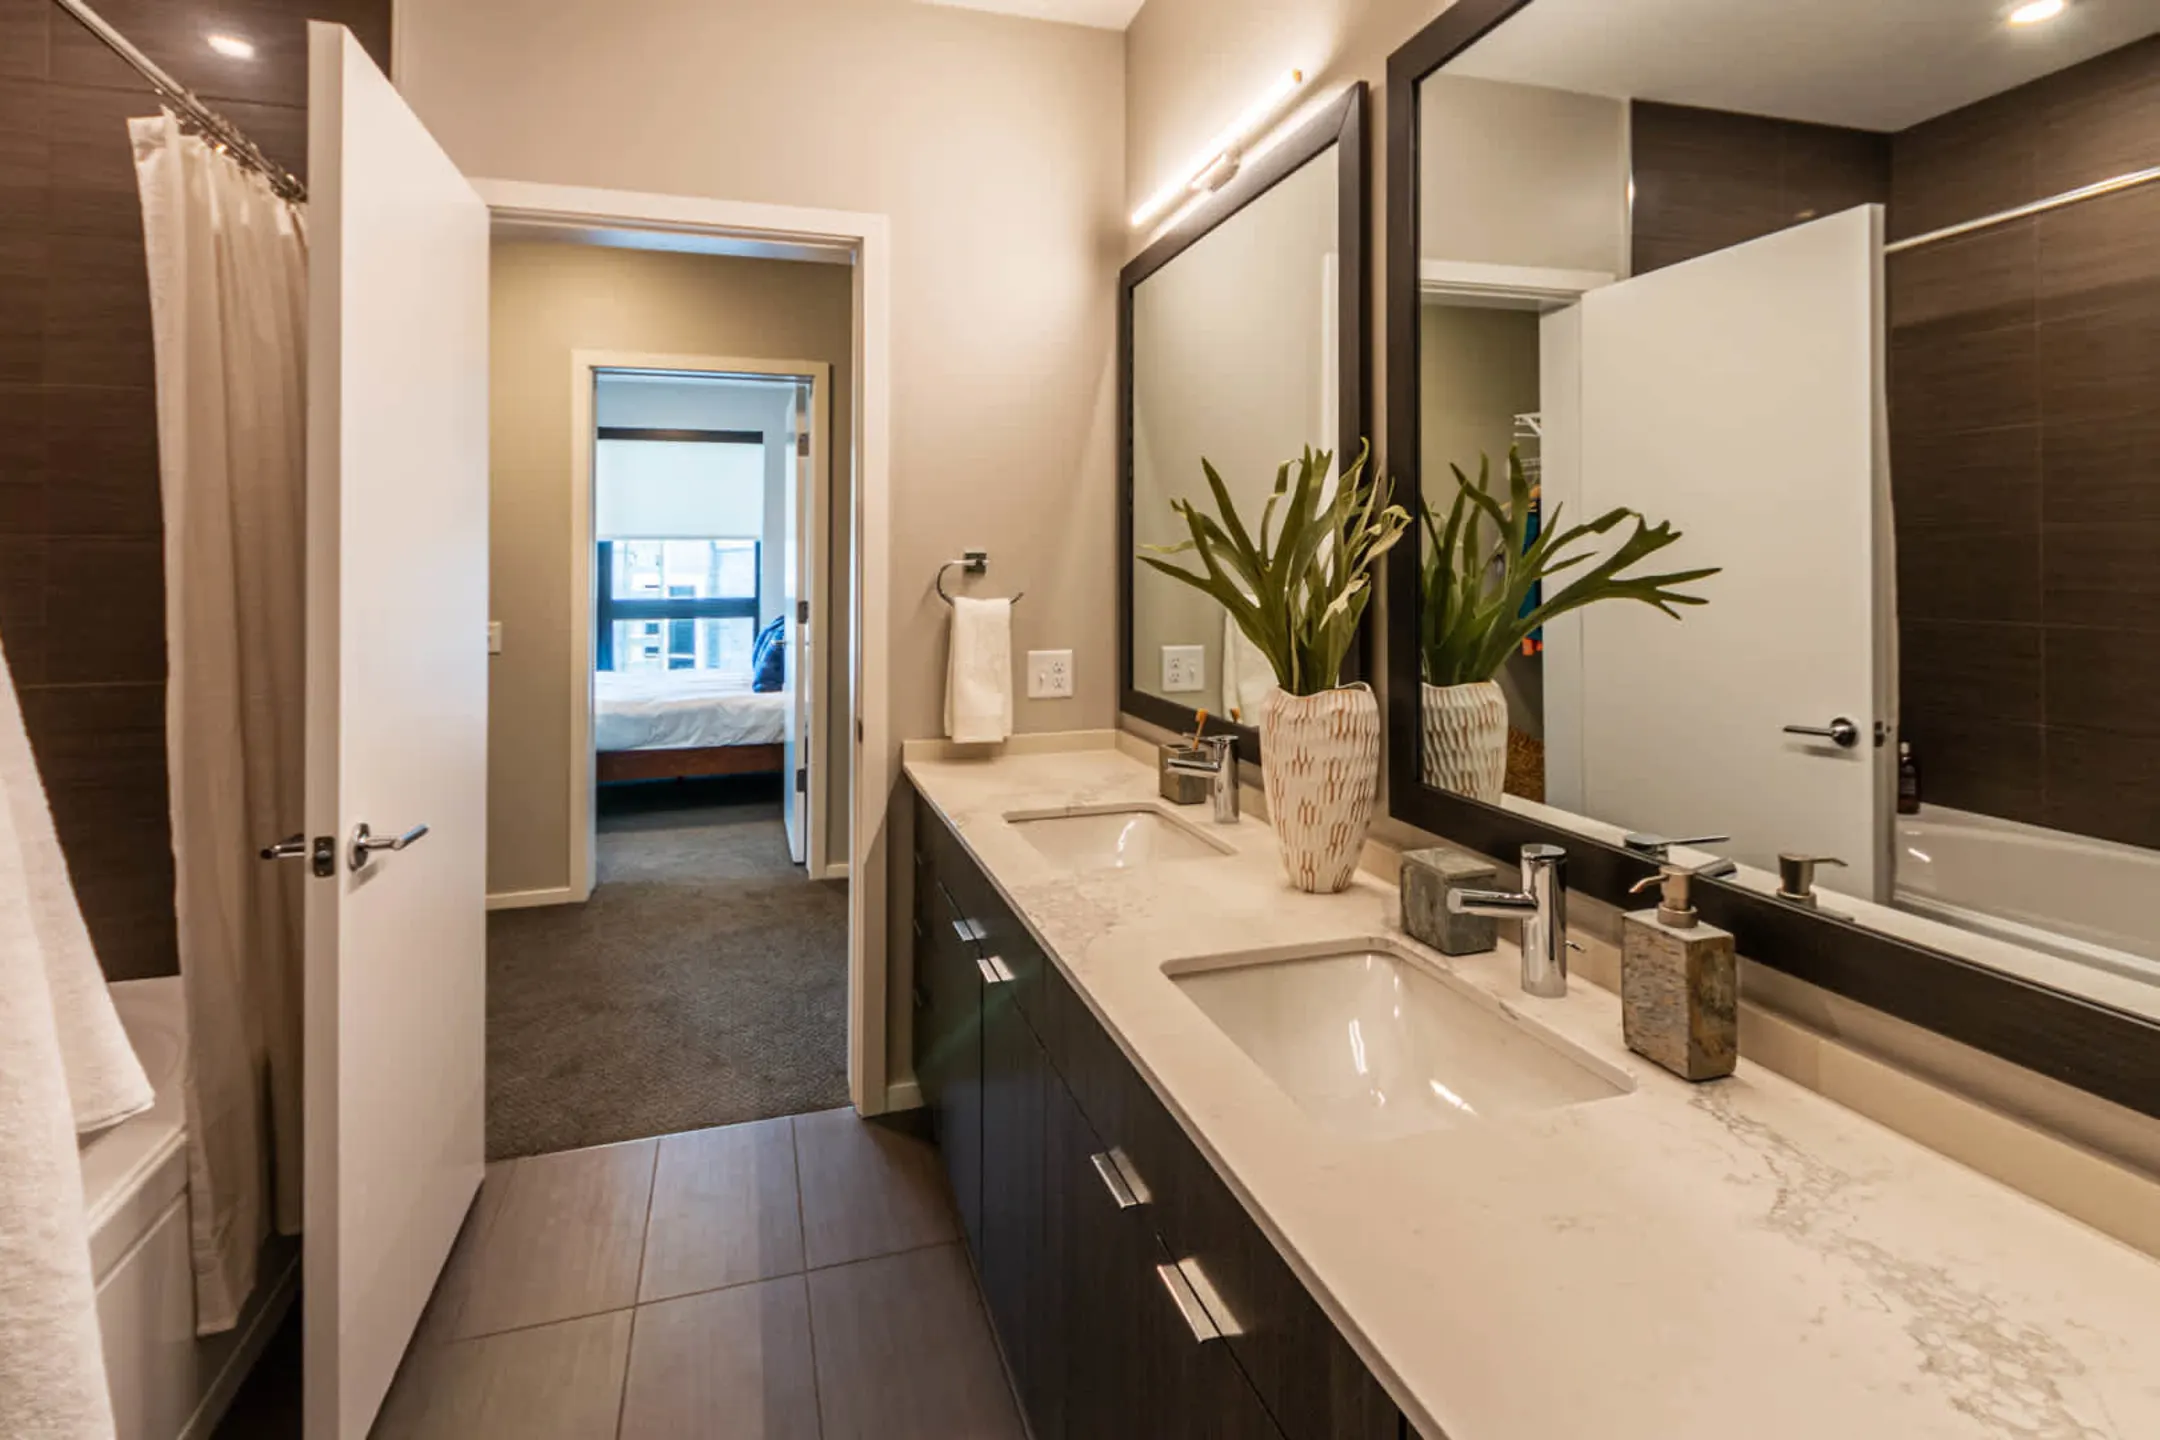 Bathroom - Milo Apartments - Denver, CO